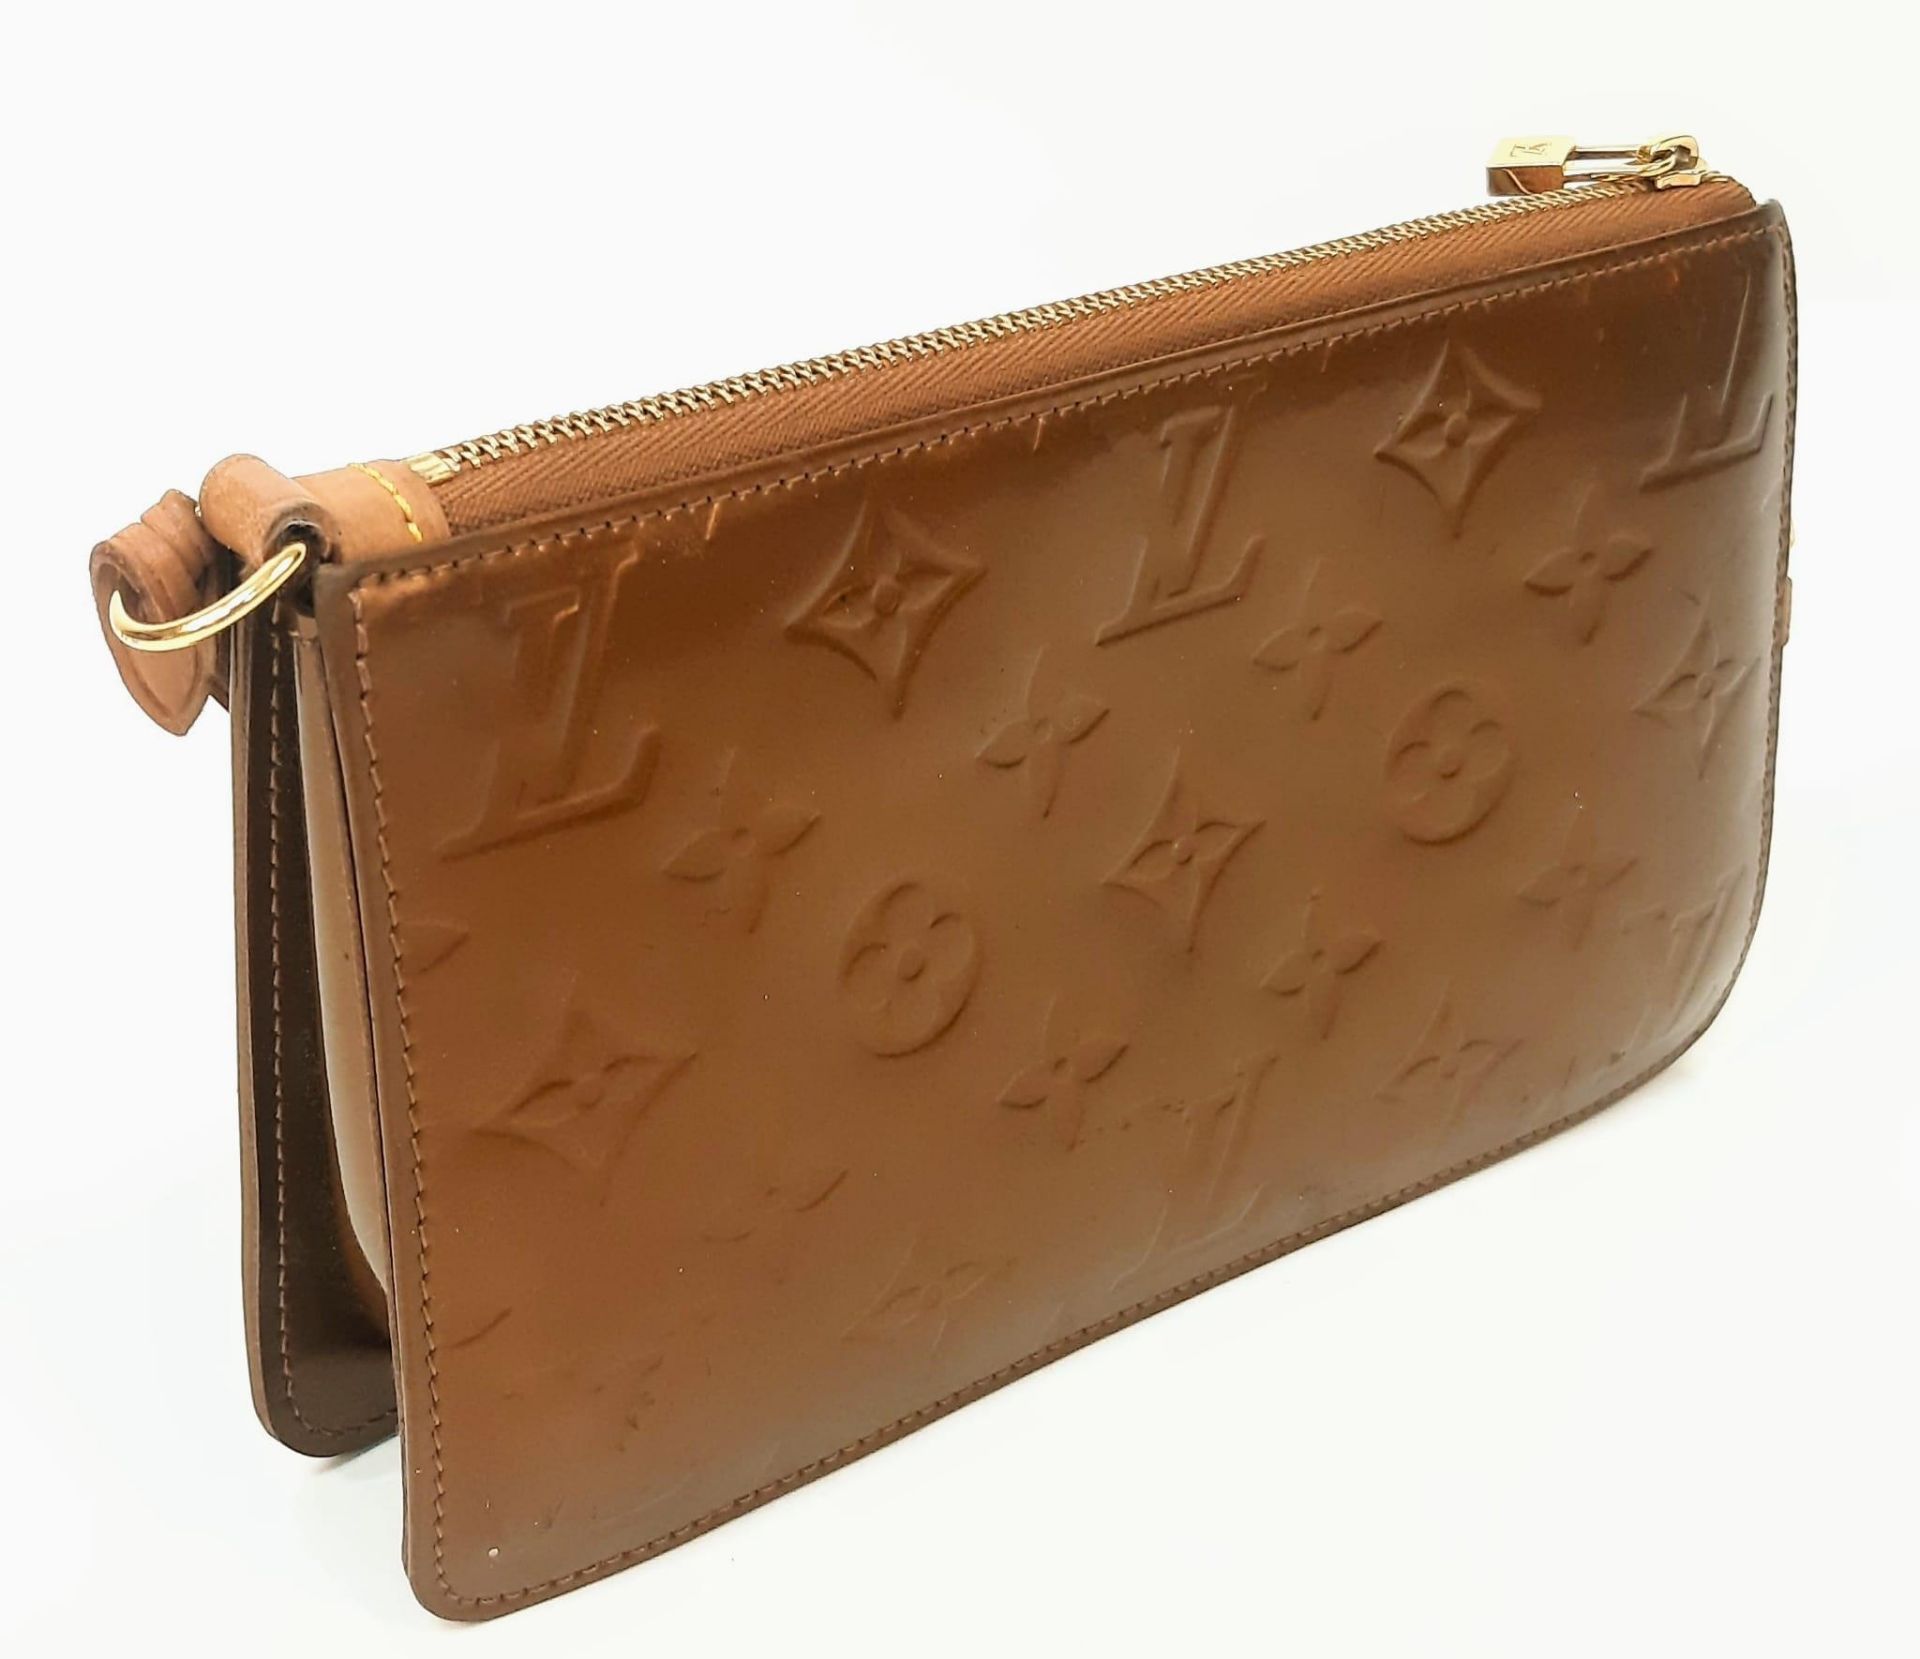 A Louis Vuitton Vernis Pochette Shoulder Bag in Copper, Emboss LV Detailing, Dark Tan Leather Strap. - Image 4 of 7